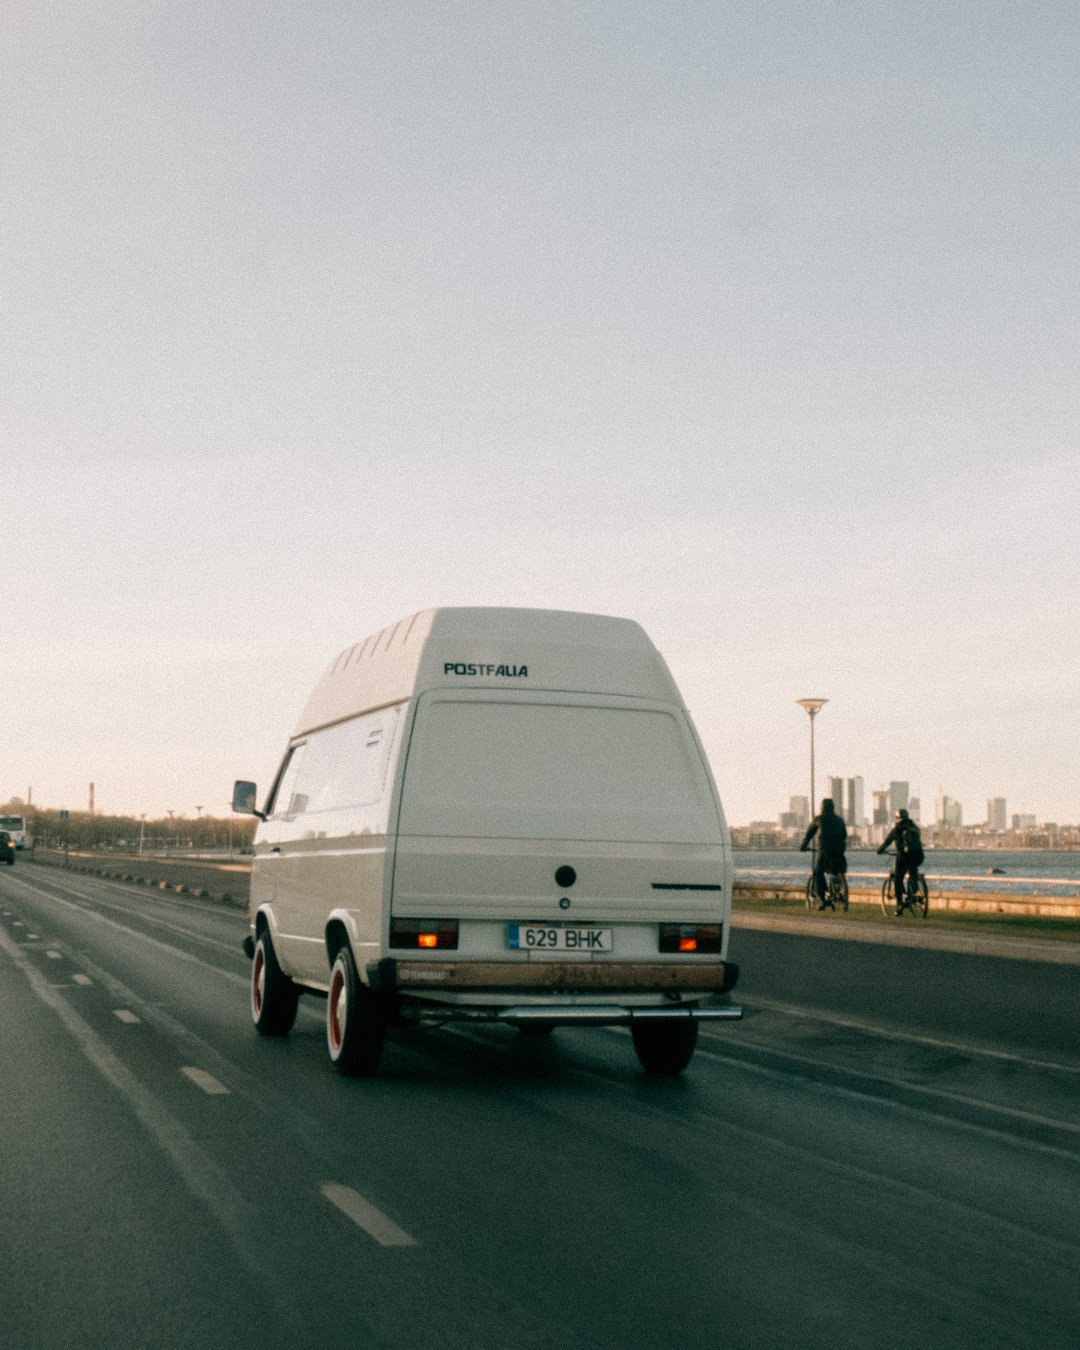 white van on road during daytime